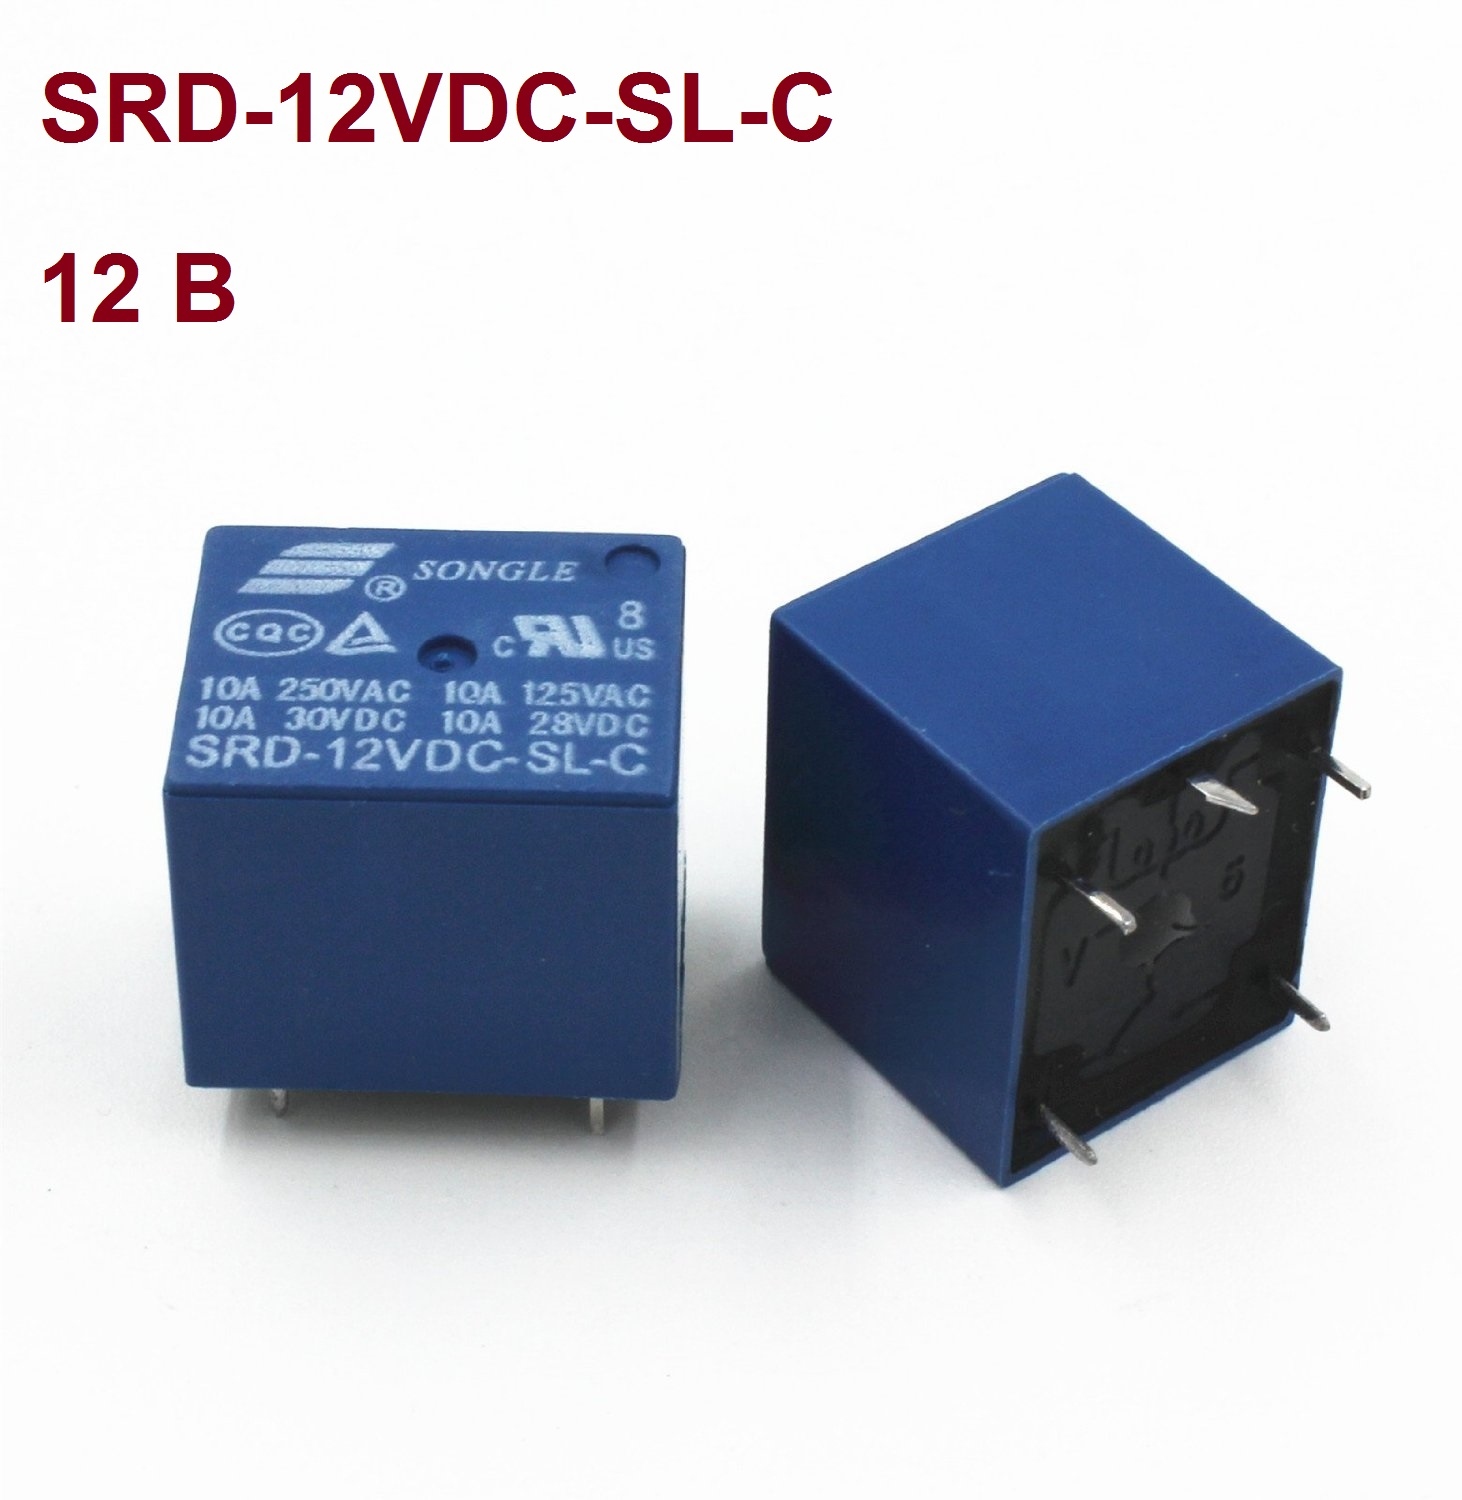 SRD-12VDC-SL-C